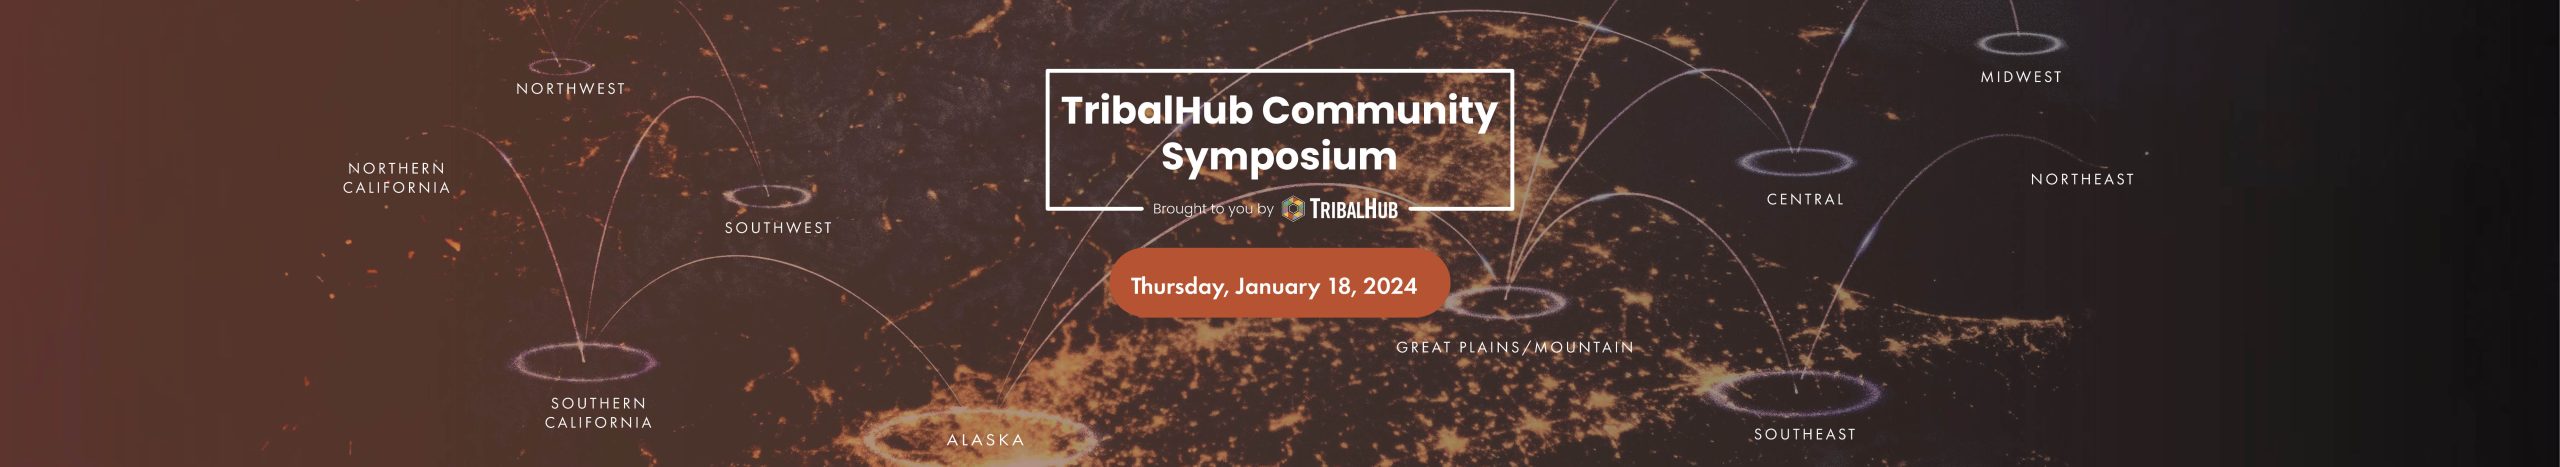 TribalHub Community Symposium